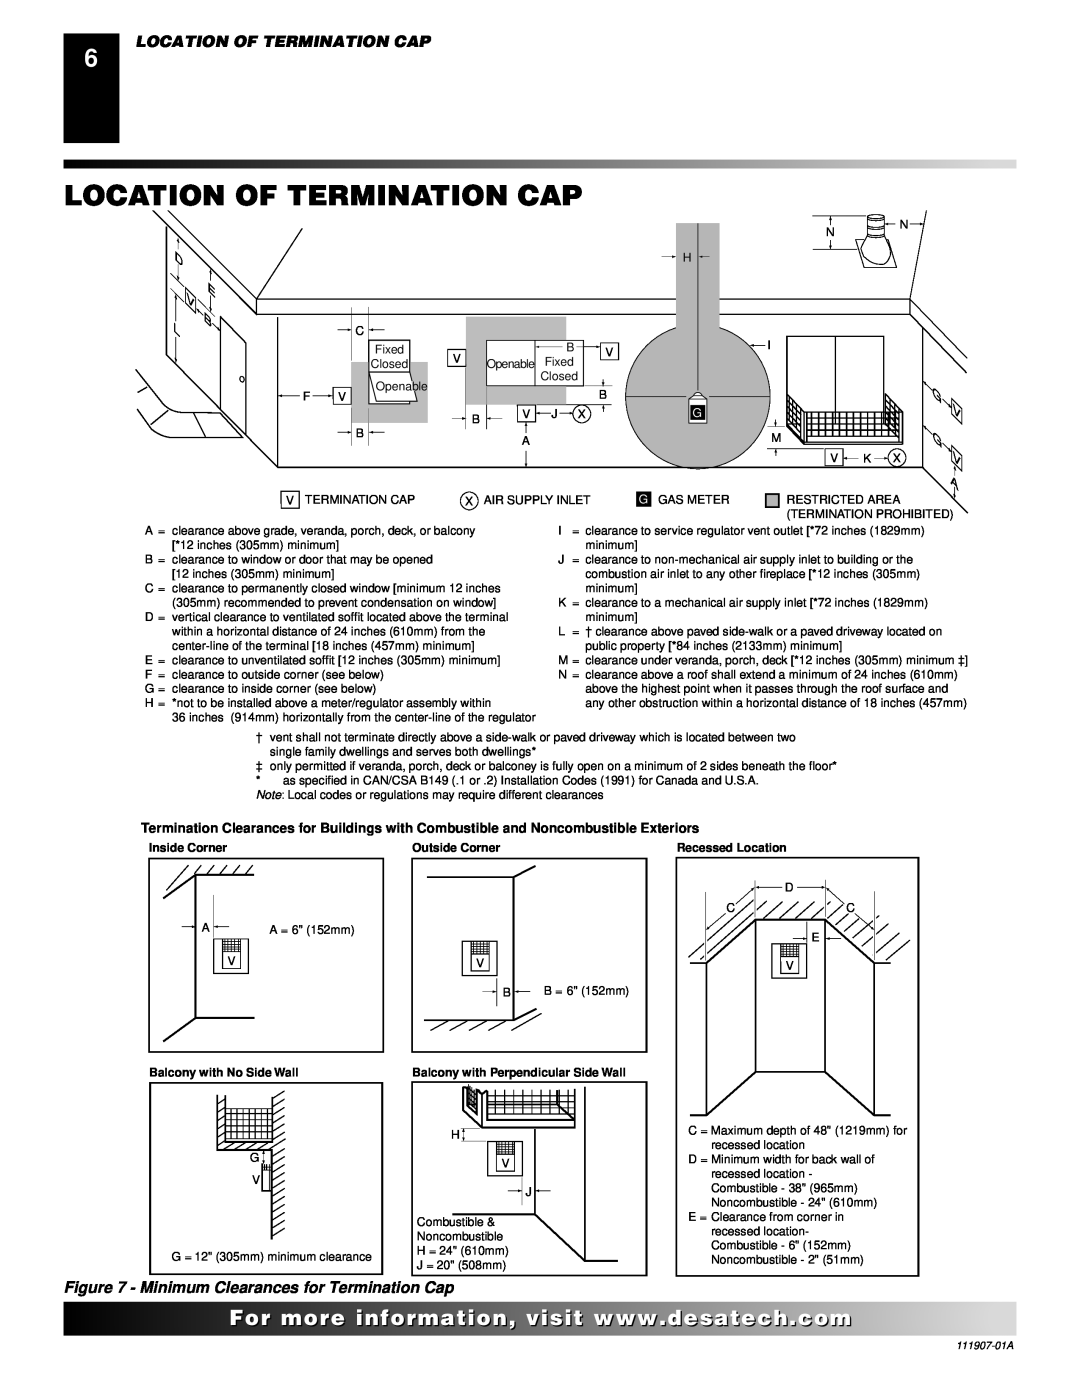 Desa (V)V42ENA(1) Location Of Termination Cap, D E B L, V G V A, Minimum Clearances for Termination Cap, Inside Corner 